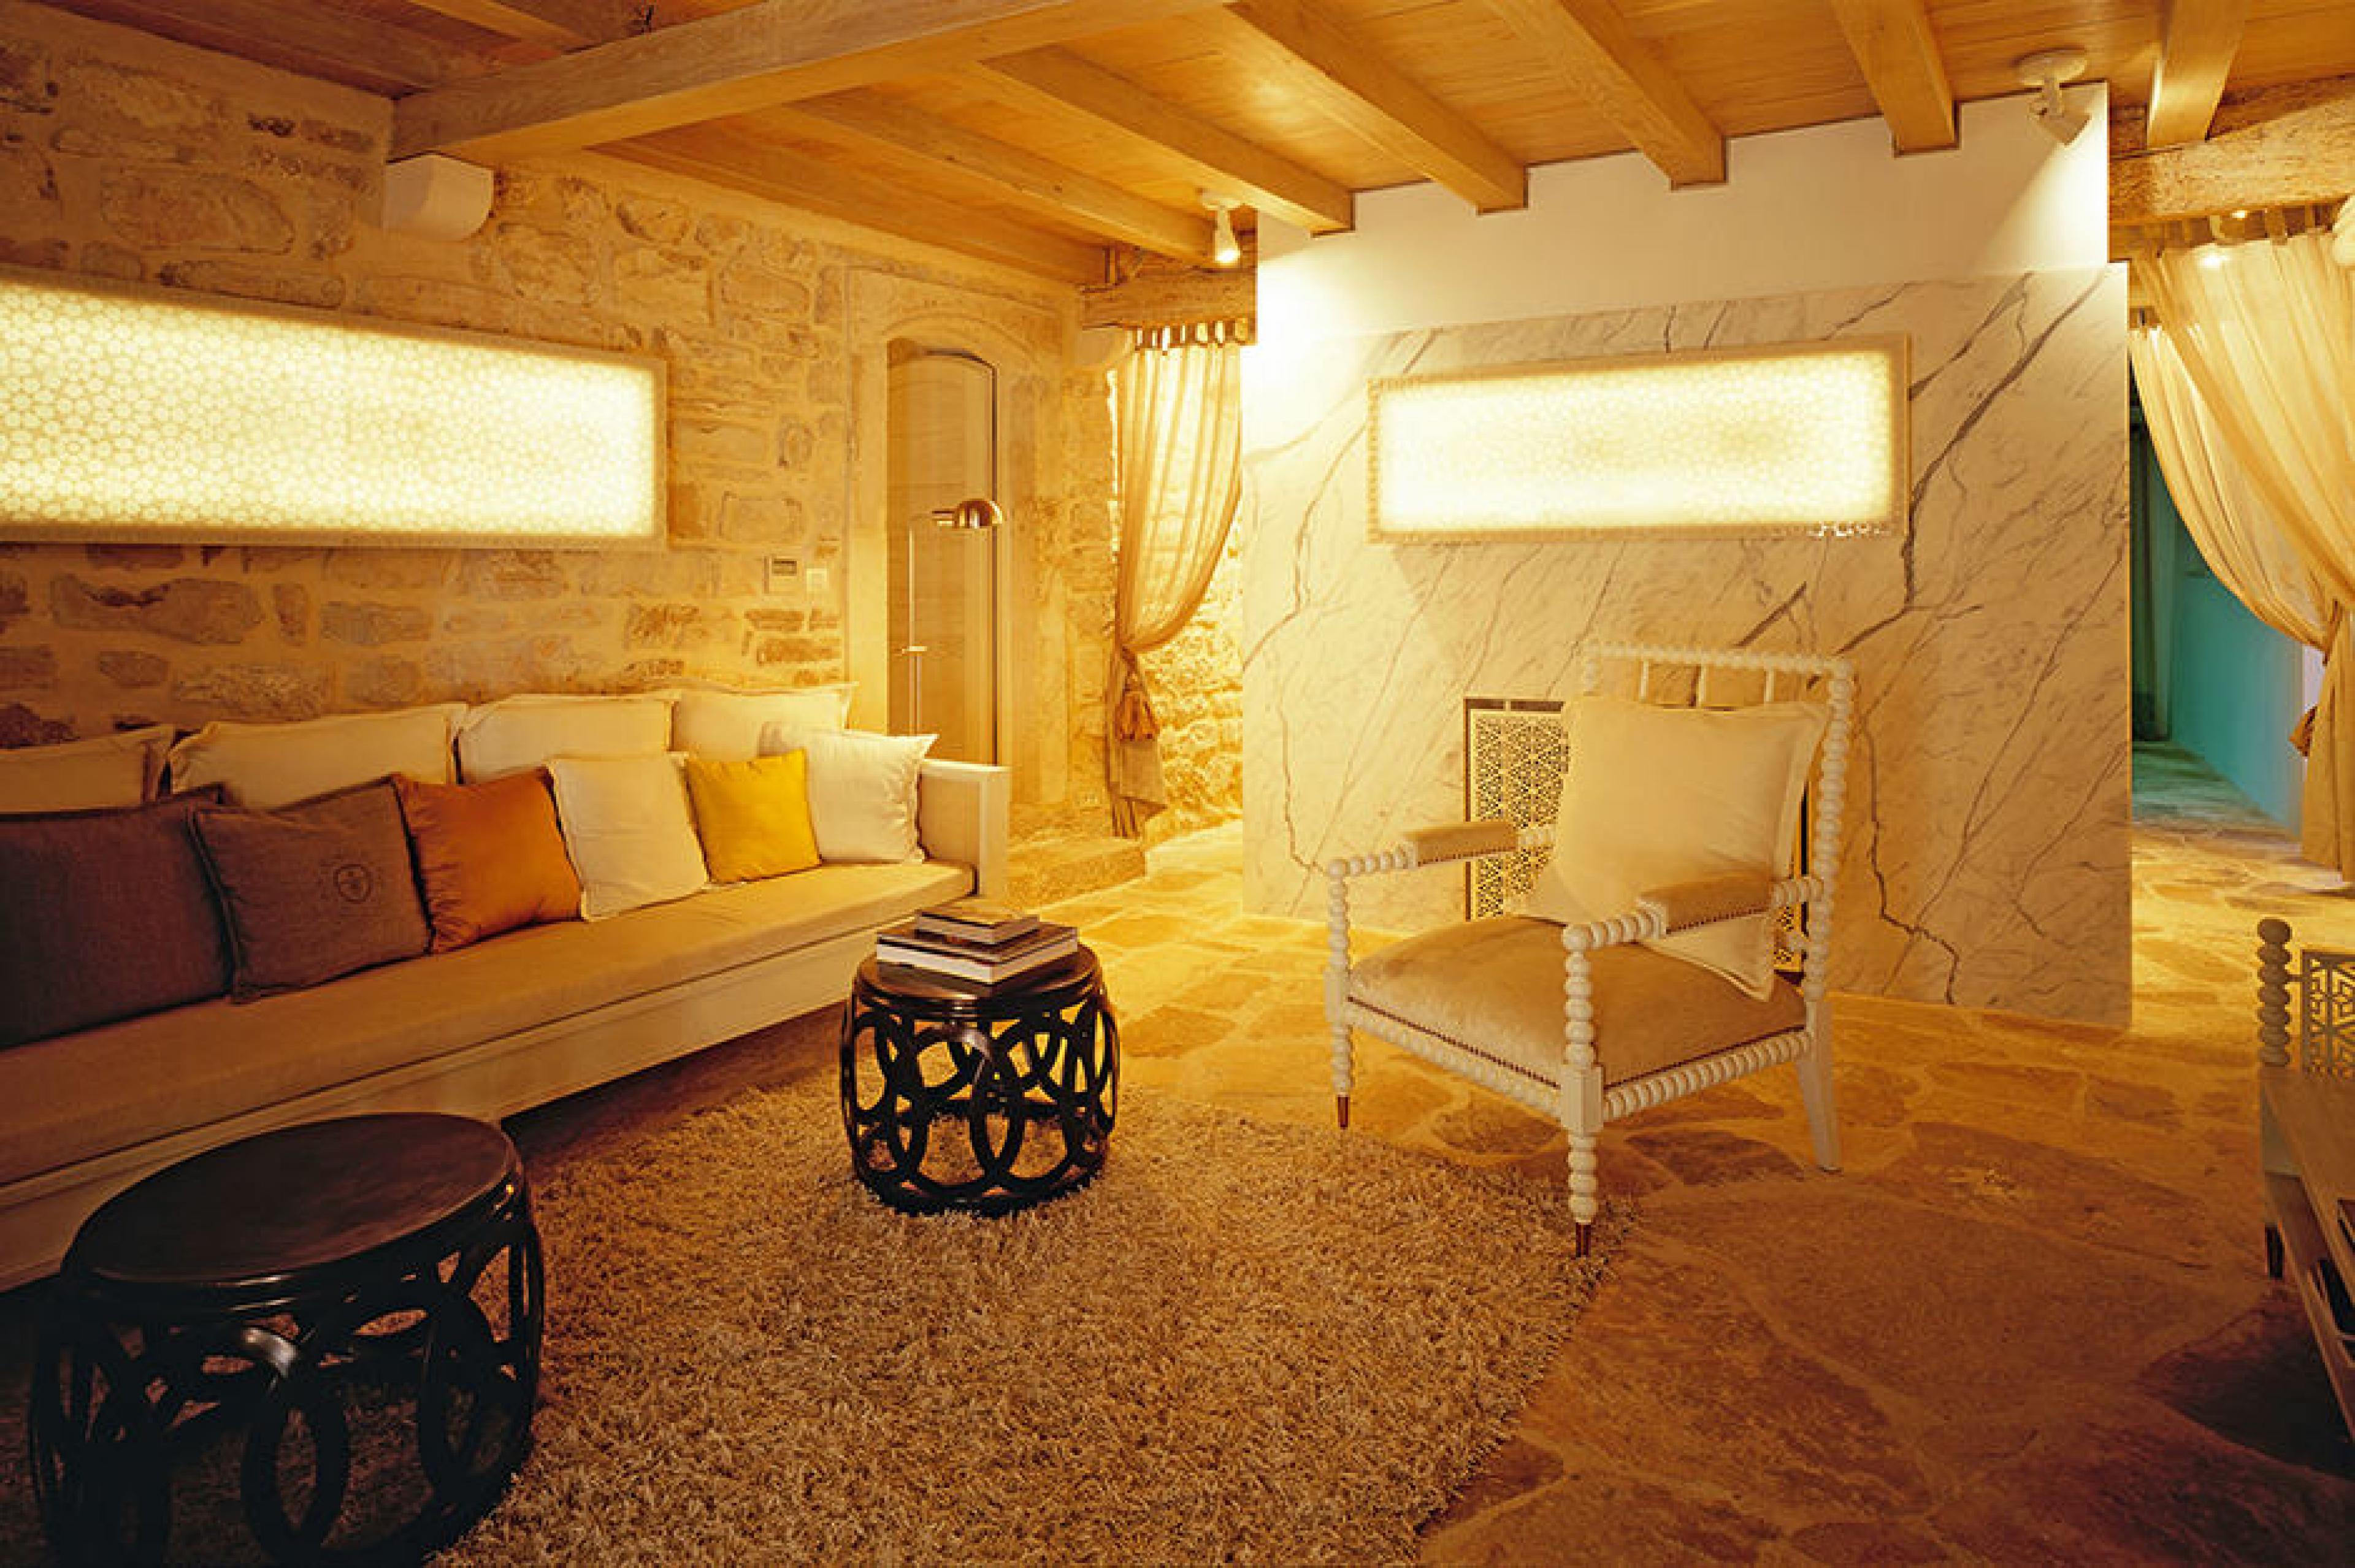 Living Room at Lesic Dimitri Palace, Croatian Islands, Croatia